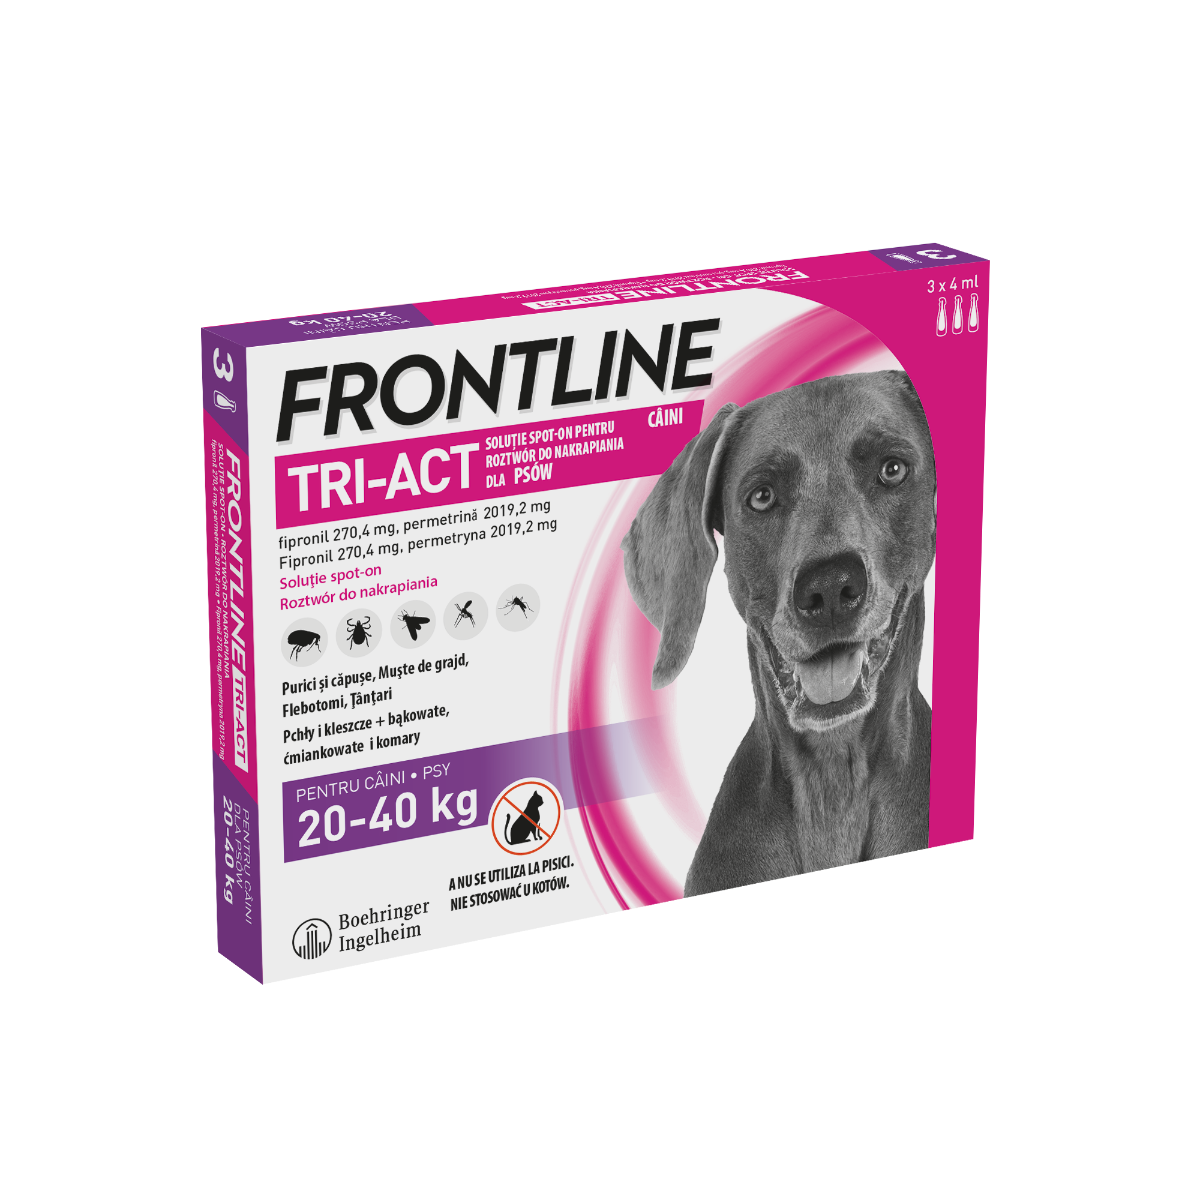 Frontline Tri-Act L soluție spot-on pentru câini 20-40 kg, 3 pipete, Frontline